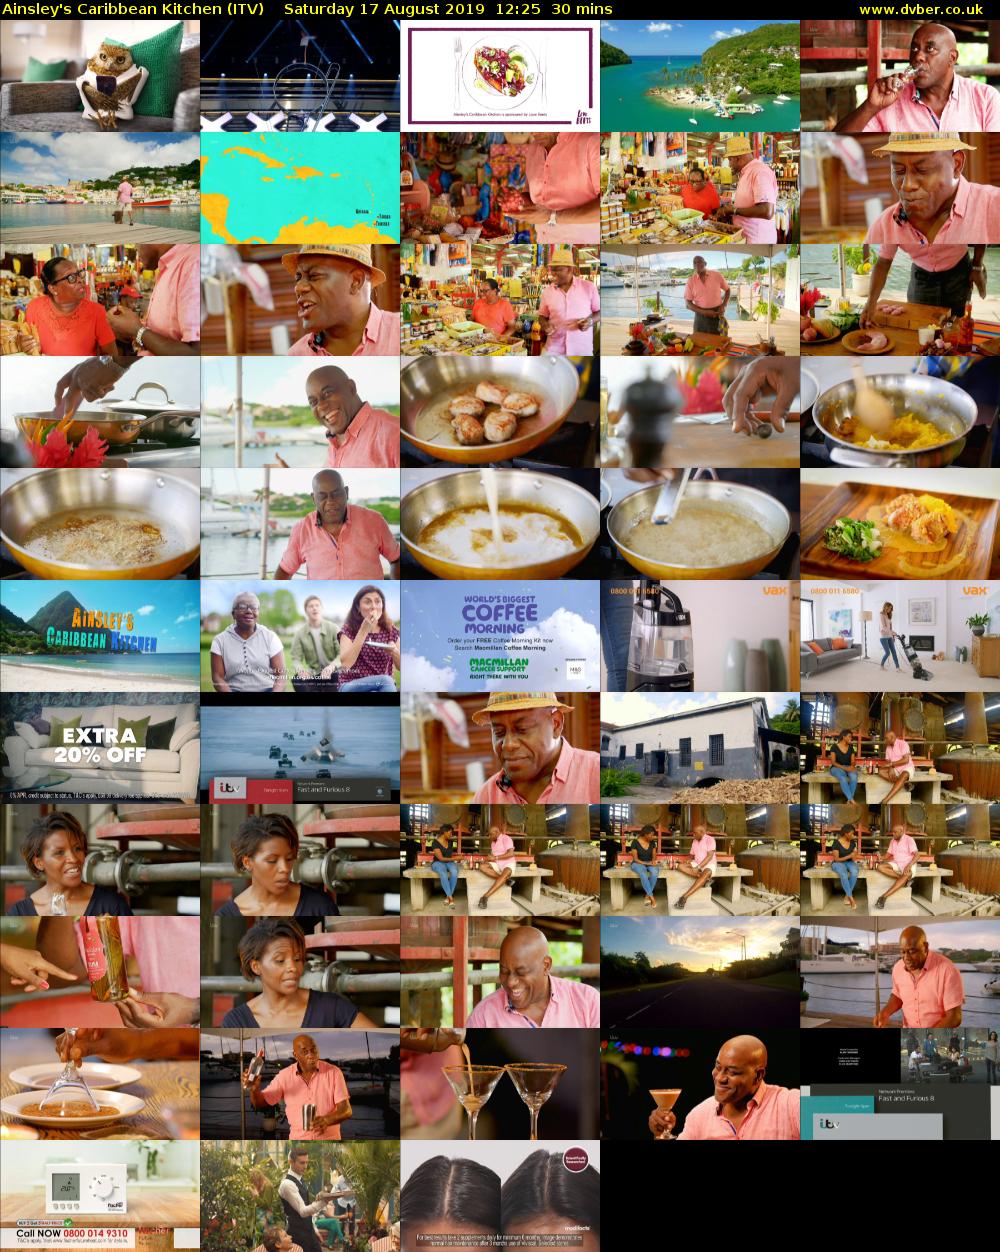 Ainsley's Caribbean Kitchen (ITV) Saturday 17 August 2019 12:25 - 12:55